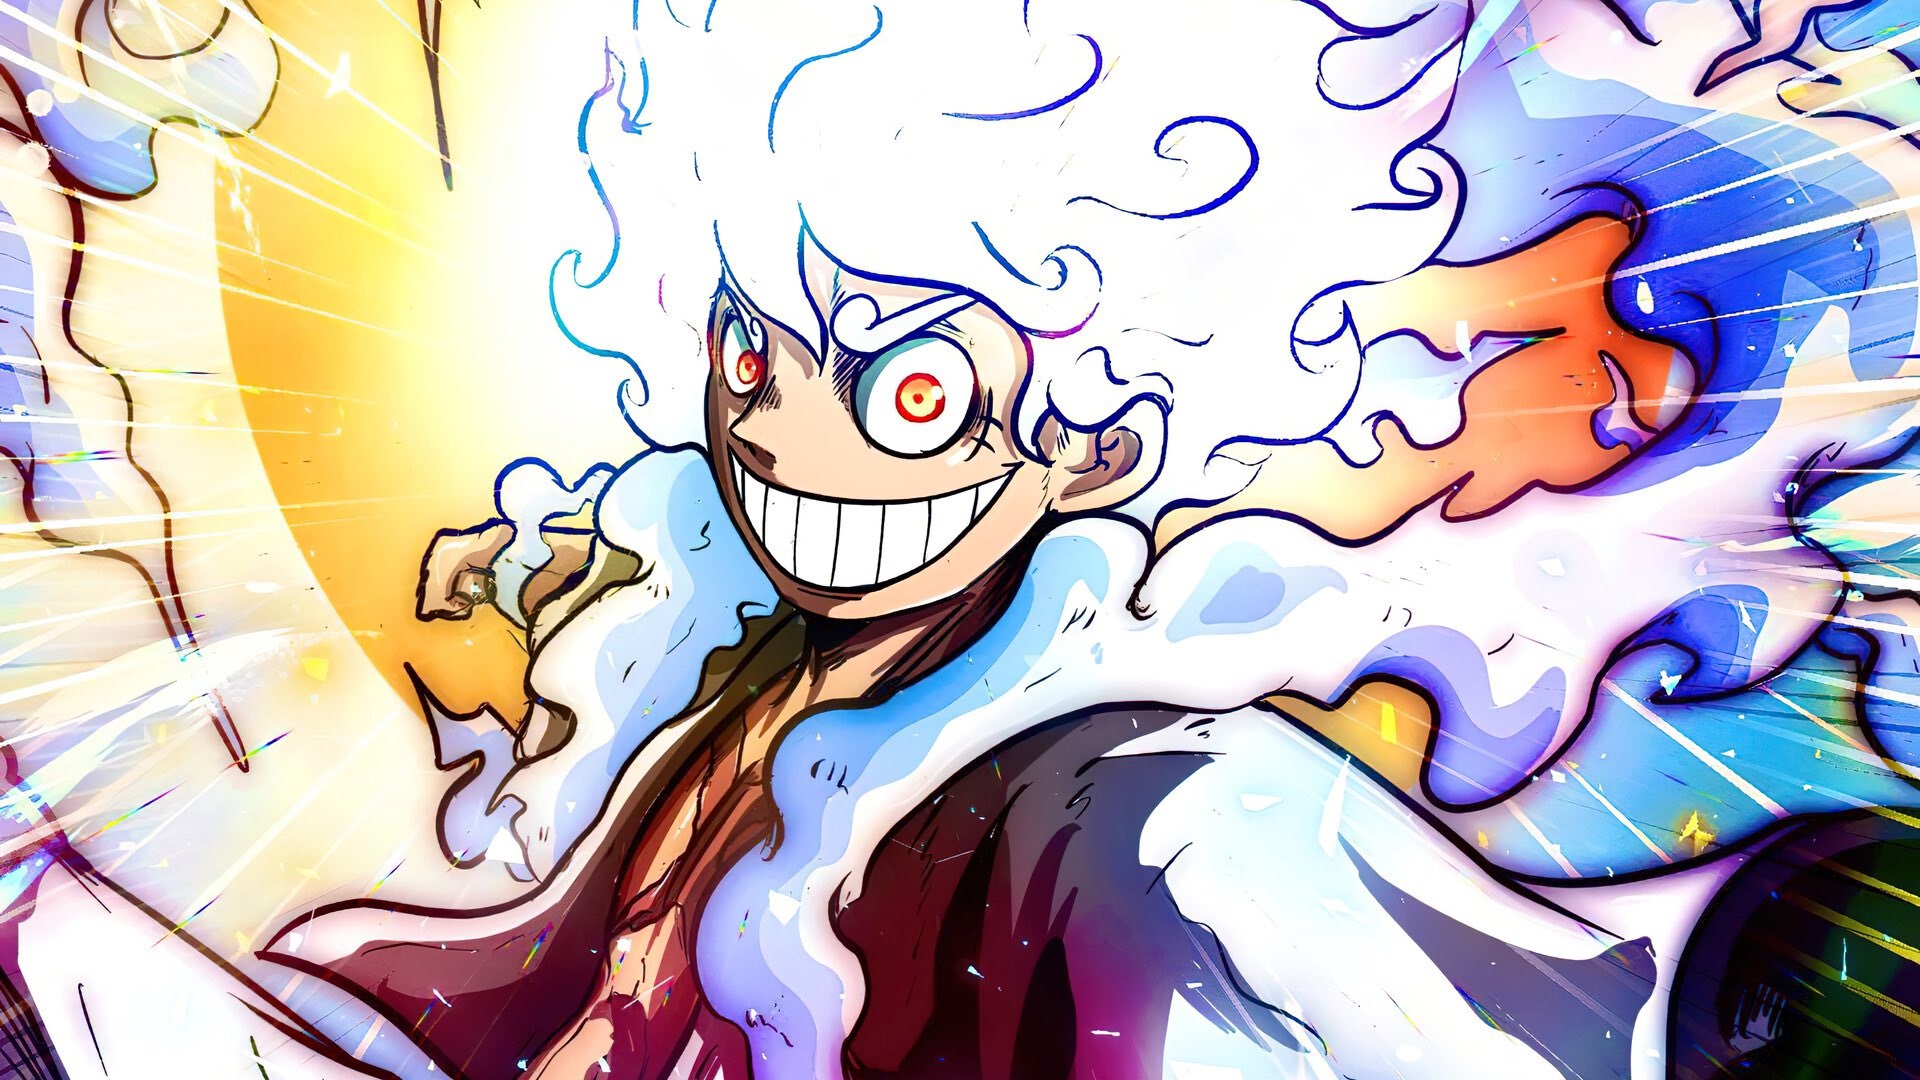 Luffy Gear 5 - One Piece